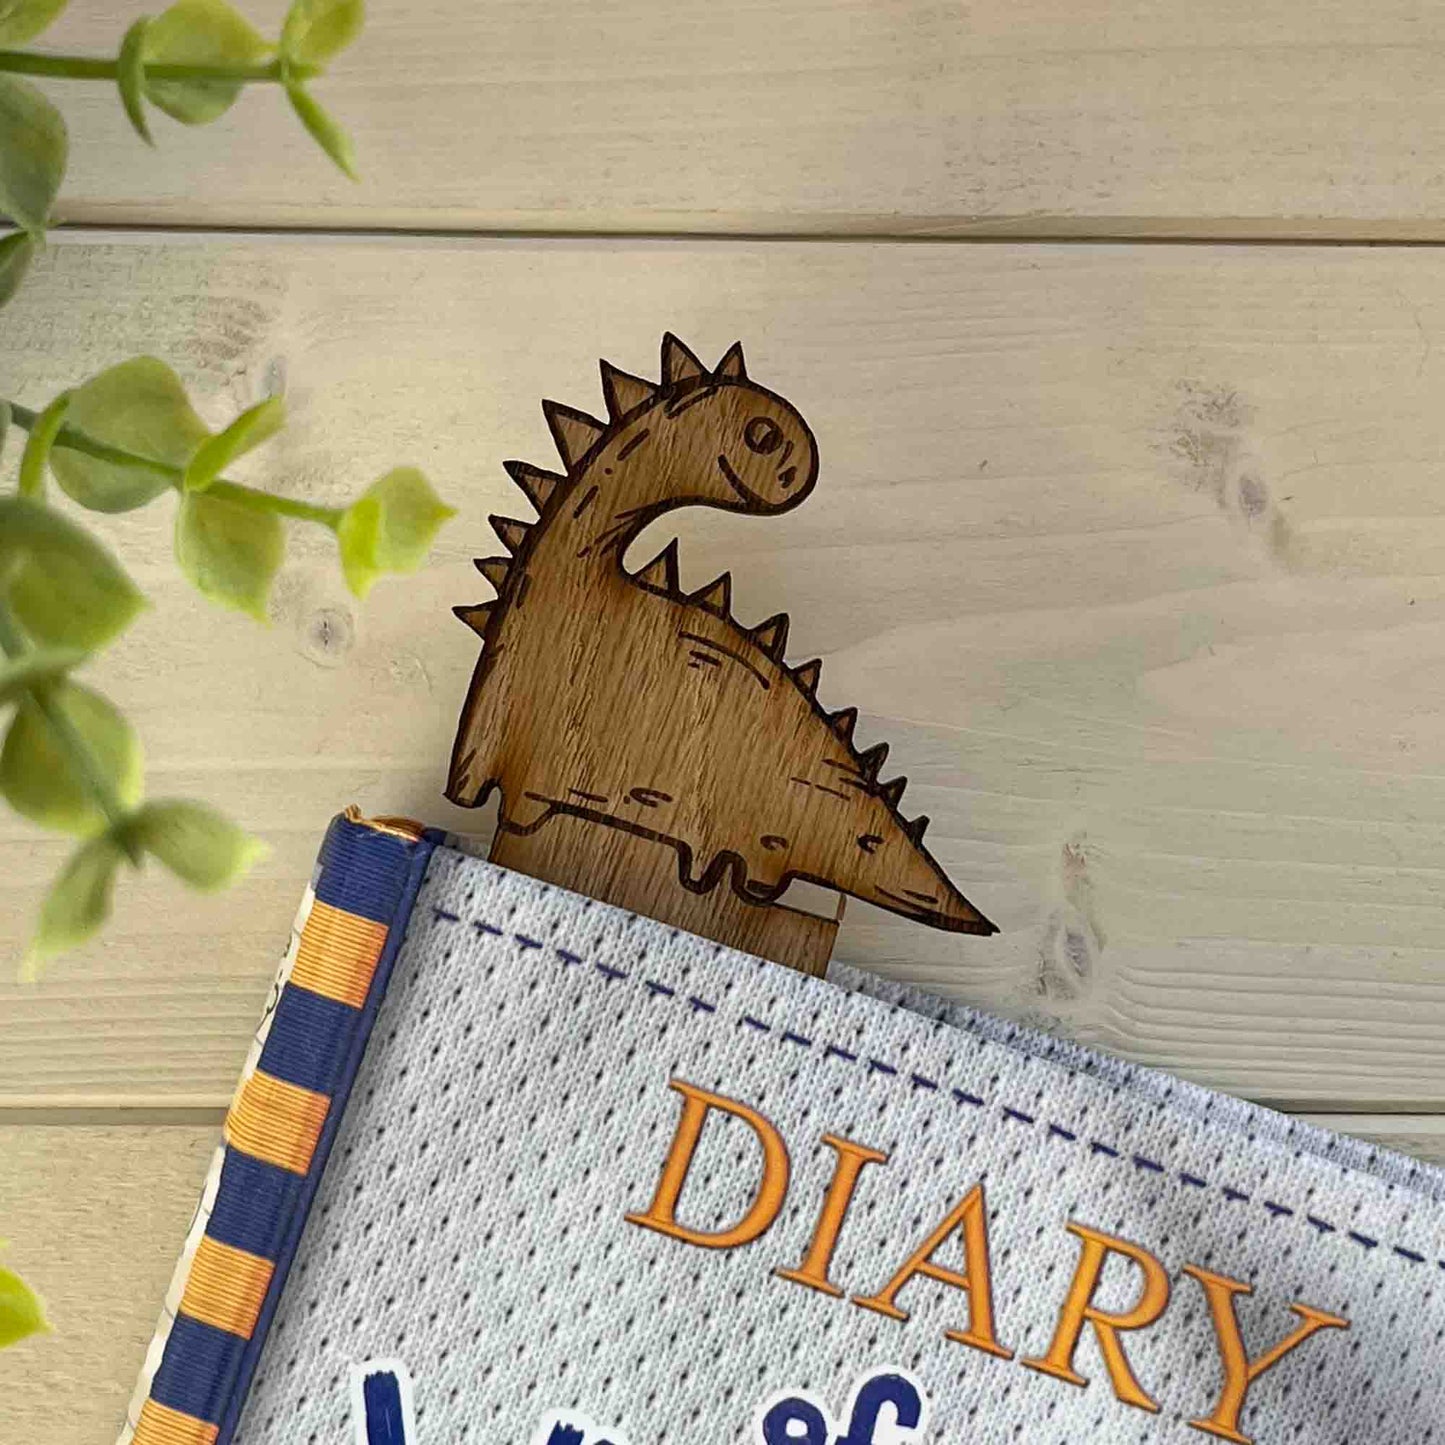 dinosaur bookmark in a book